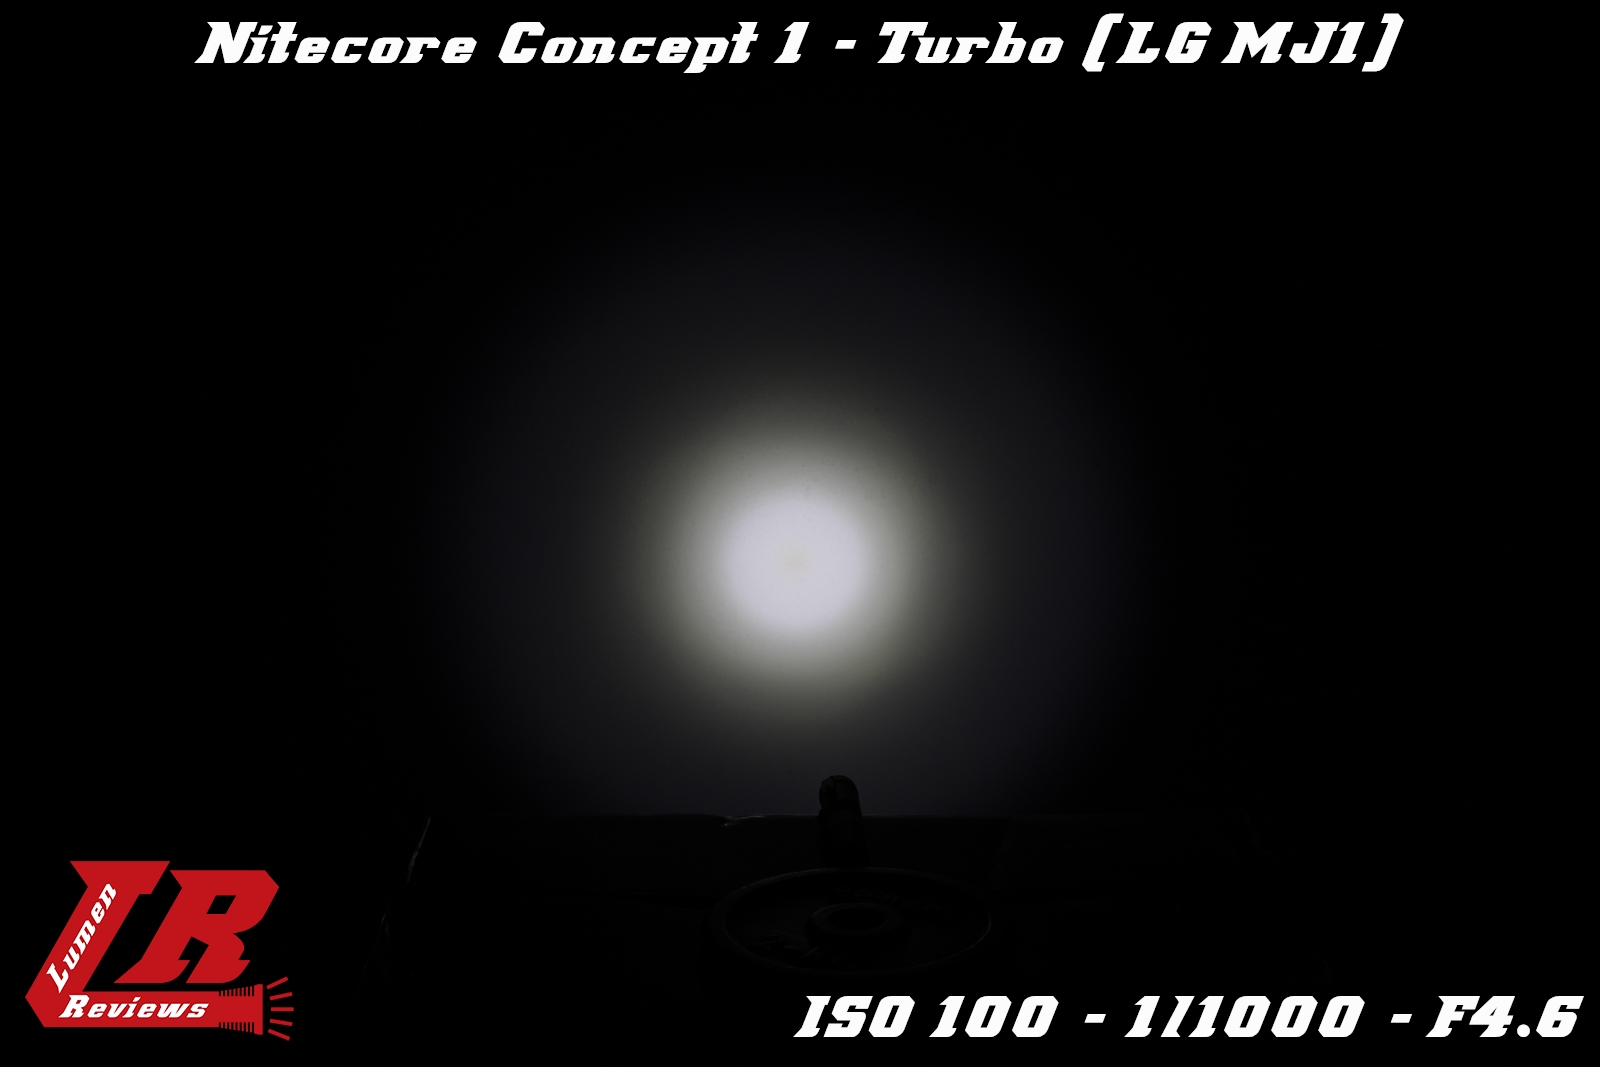 Nitecore_Concept_1_17.jpg